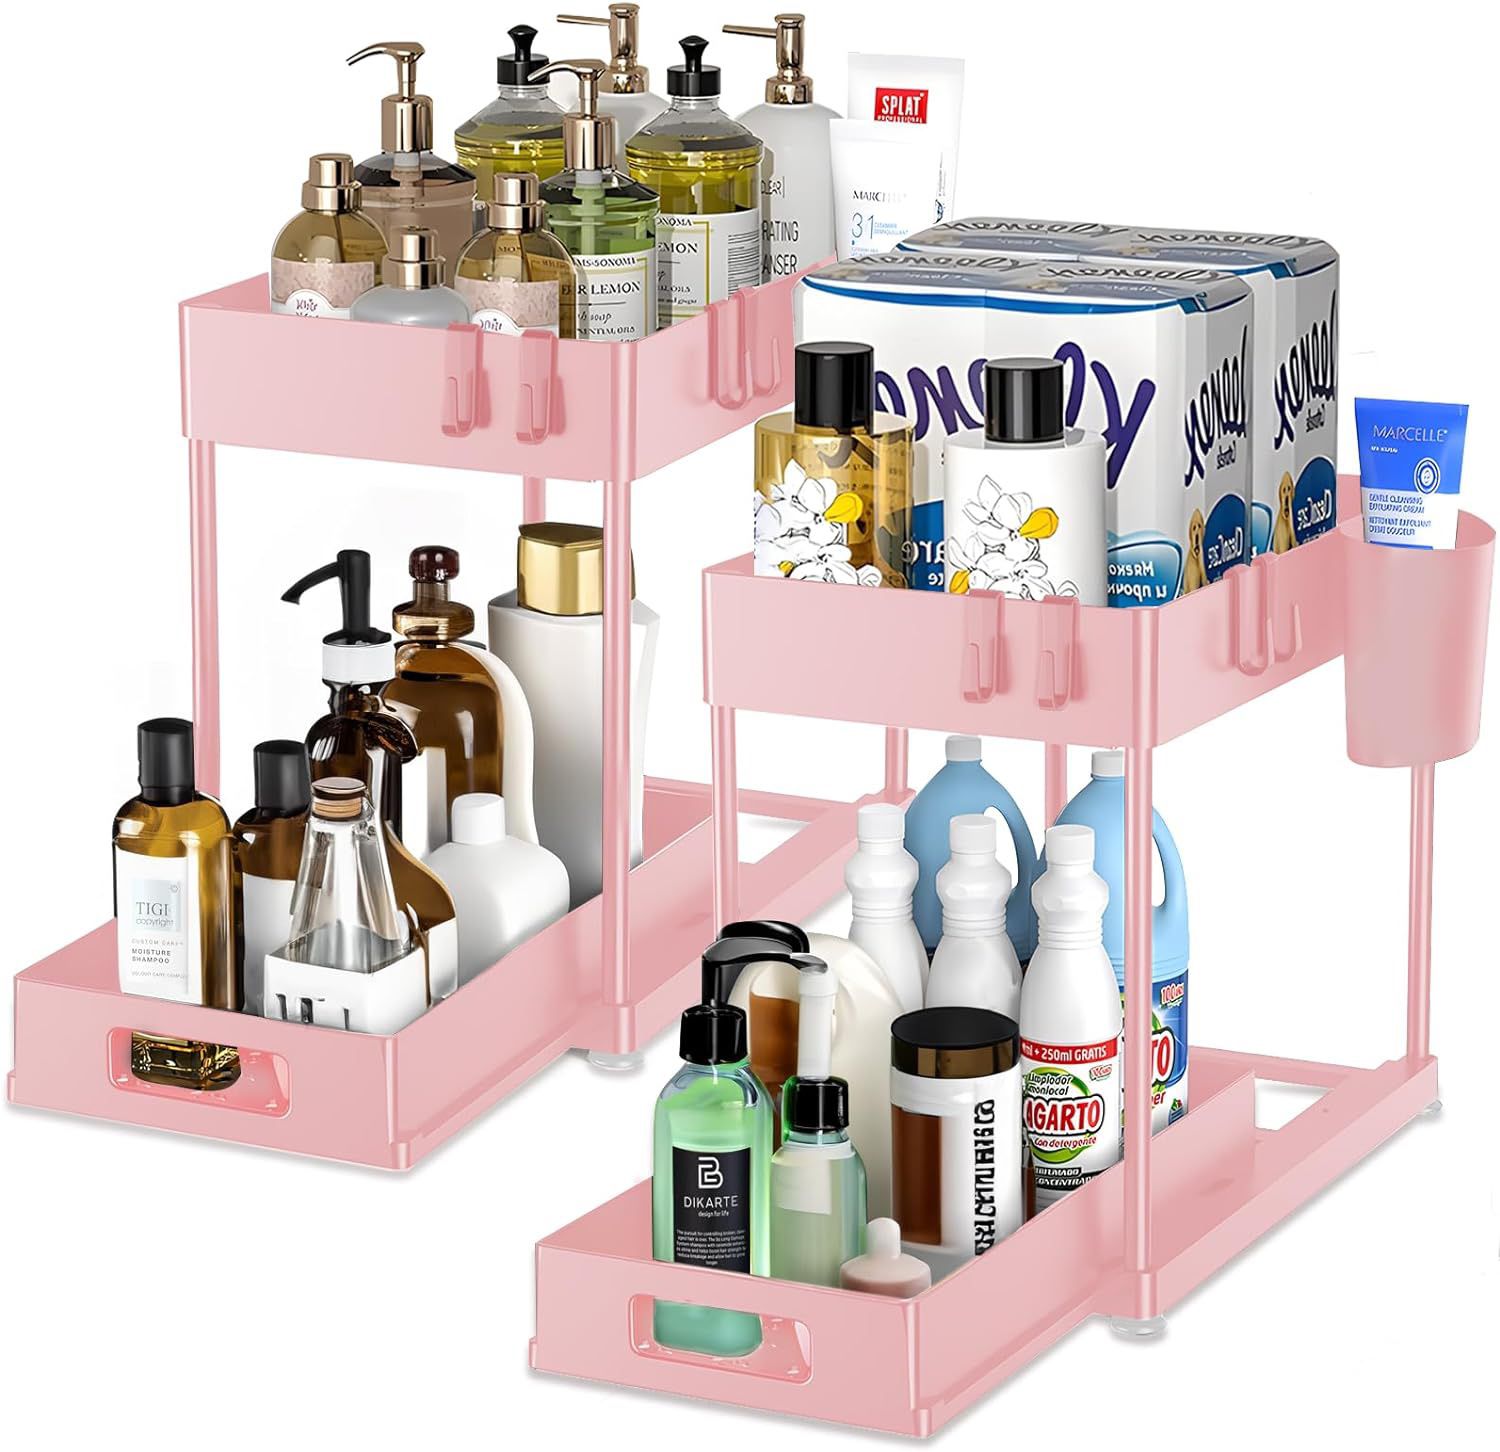 Under Sink Organizers and Storage 2 Pack 2-Tier Multi-purpose Organizers Pink